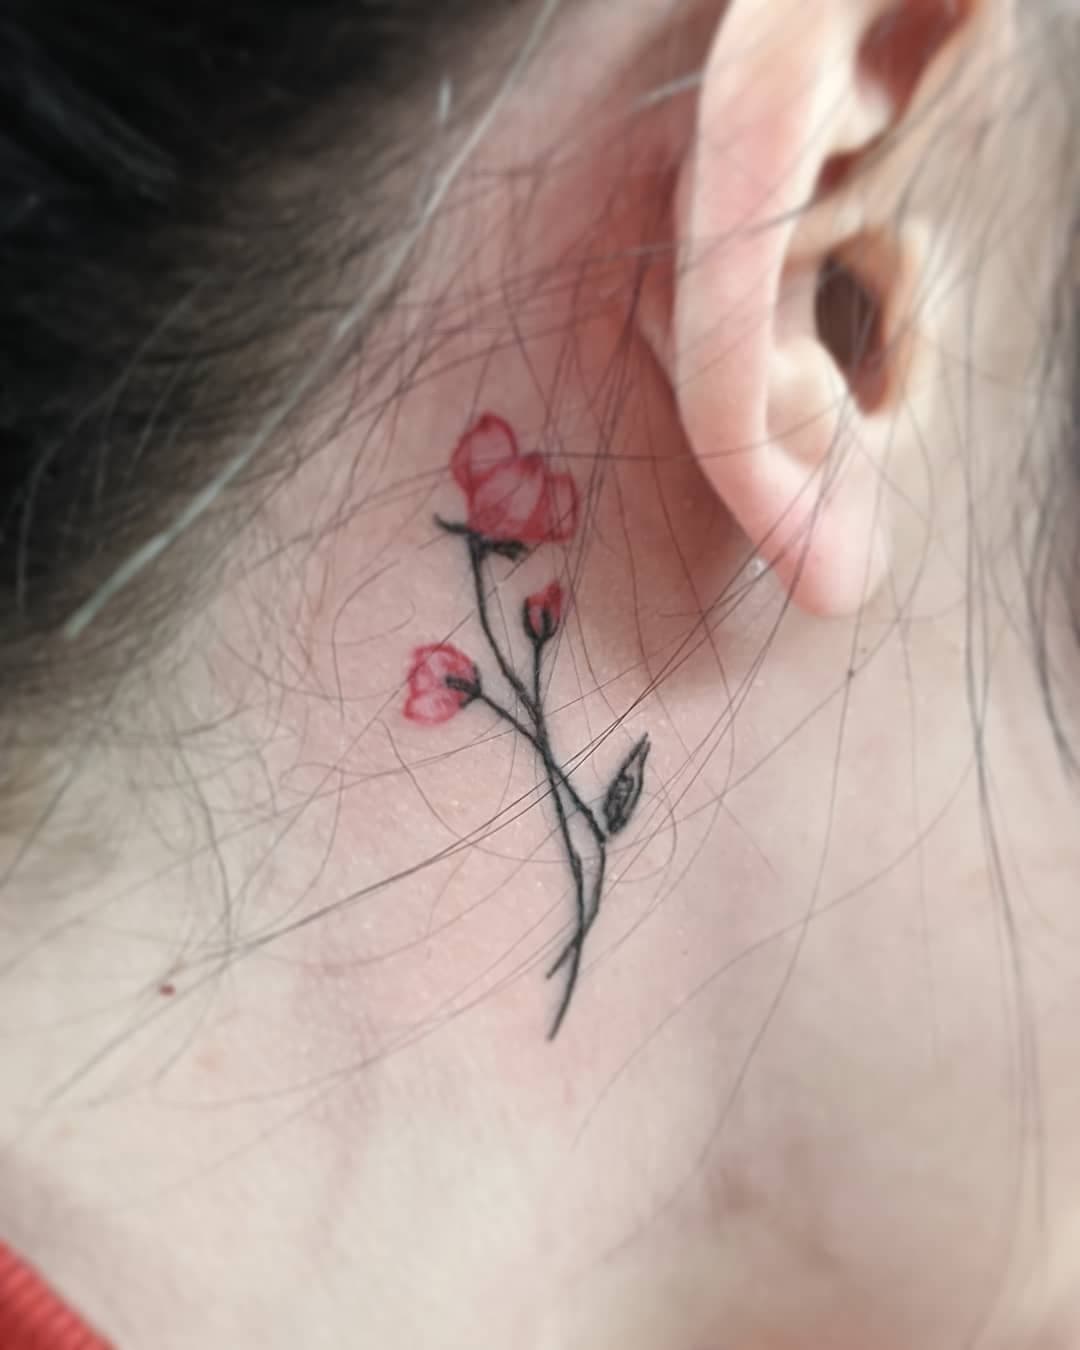 Flower behind the tattoo hero tattoo